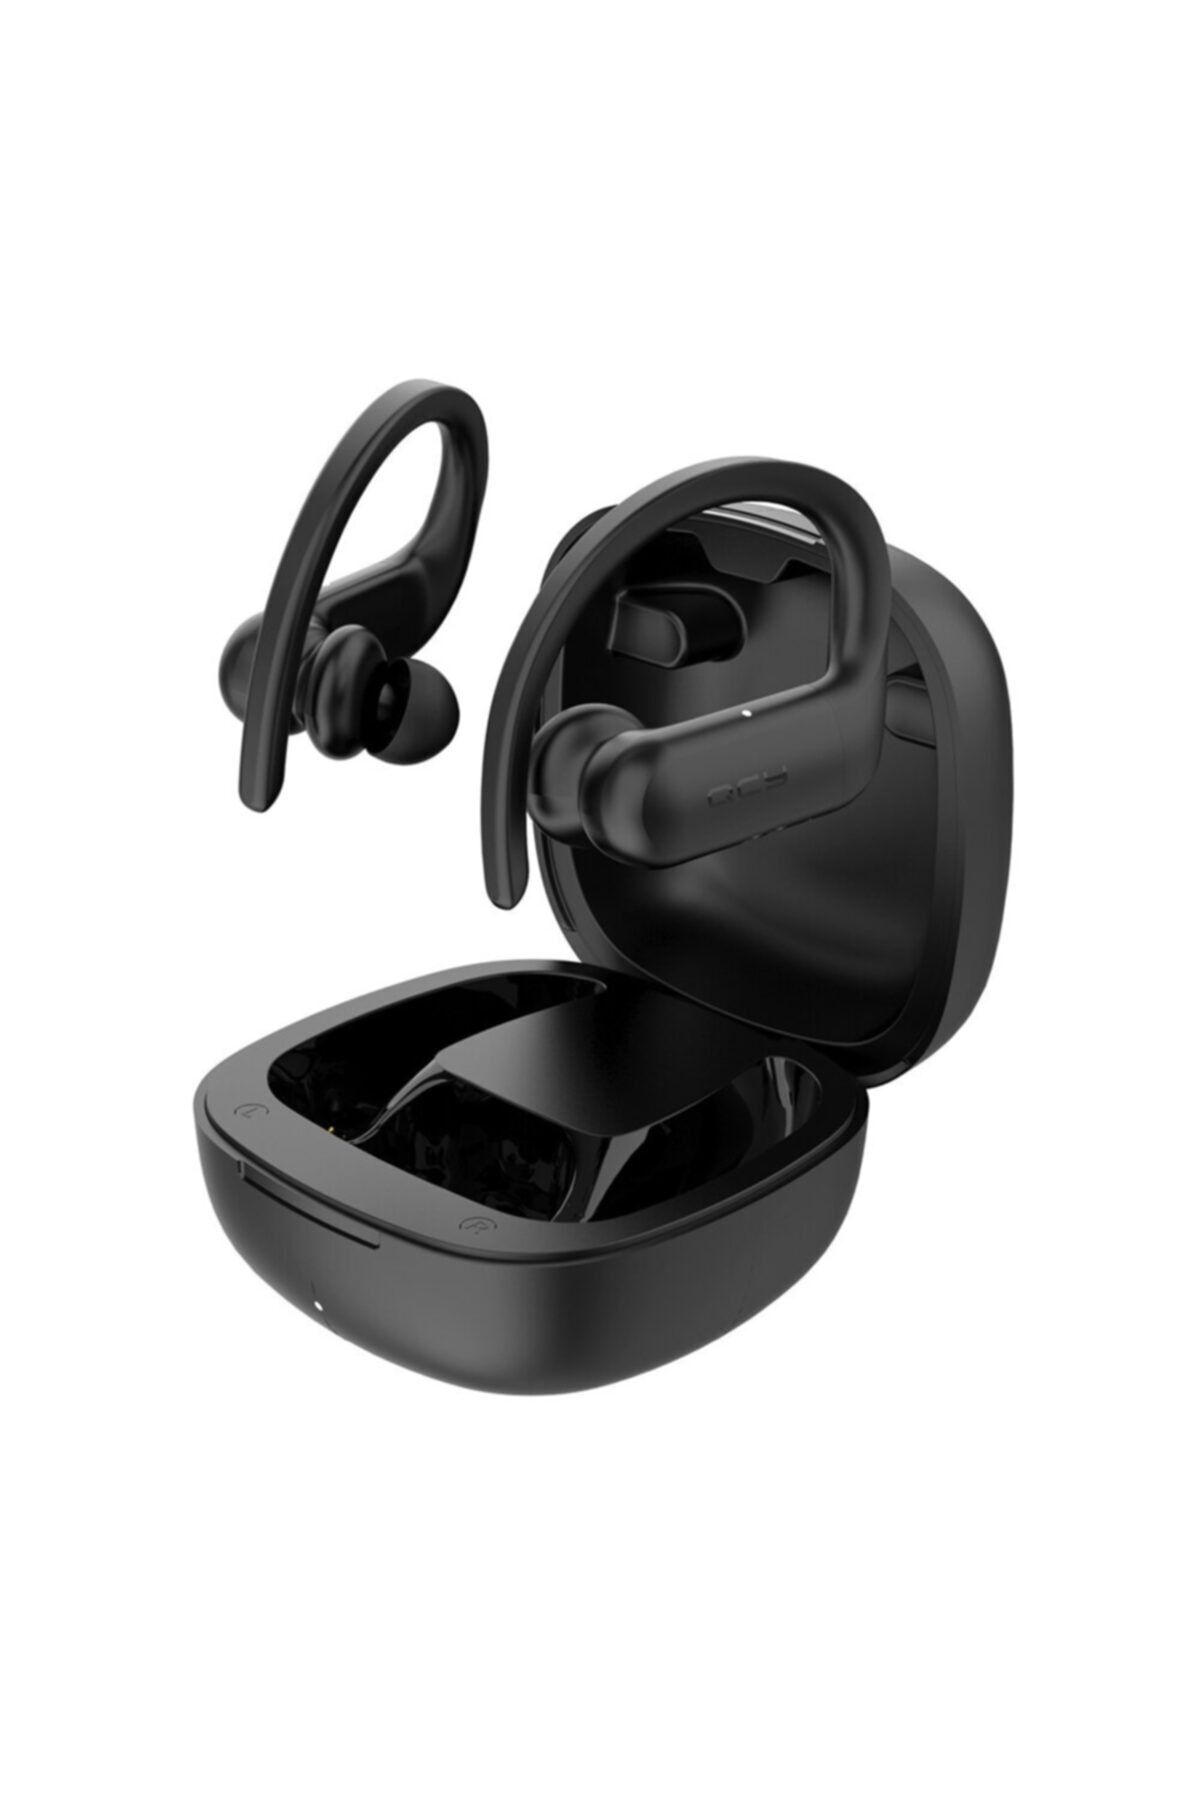 Qcy T6 Tws Bluetooth Spor Kulaklık Yeni 2020 App Oyun Modlu